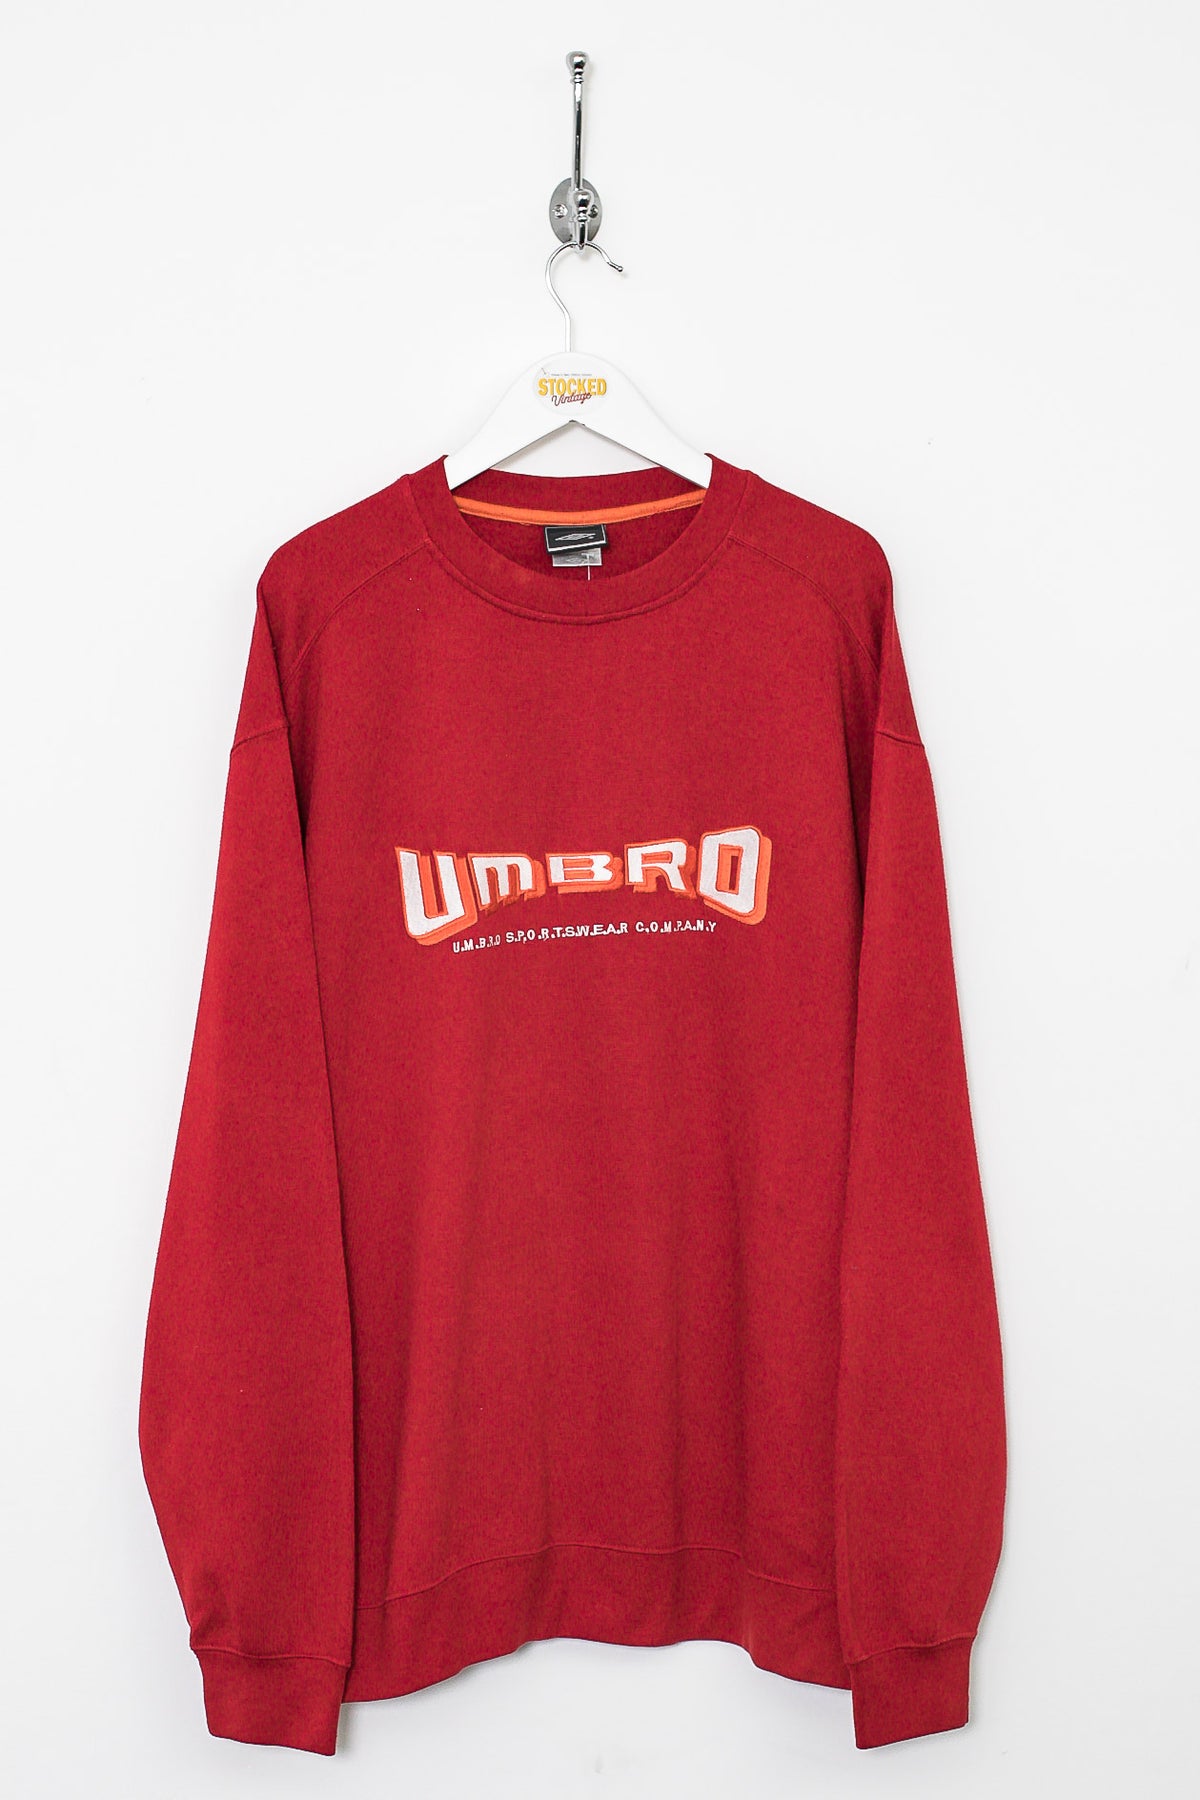 00s Umbro Sweatshirt (XL)